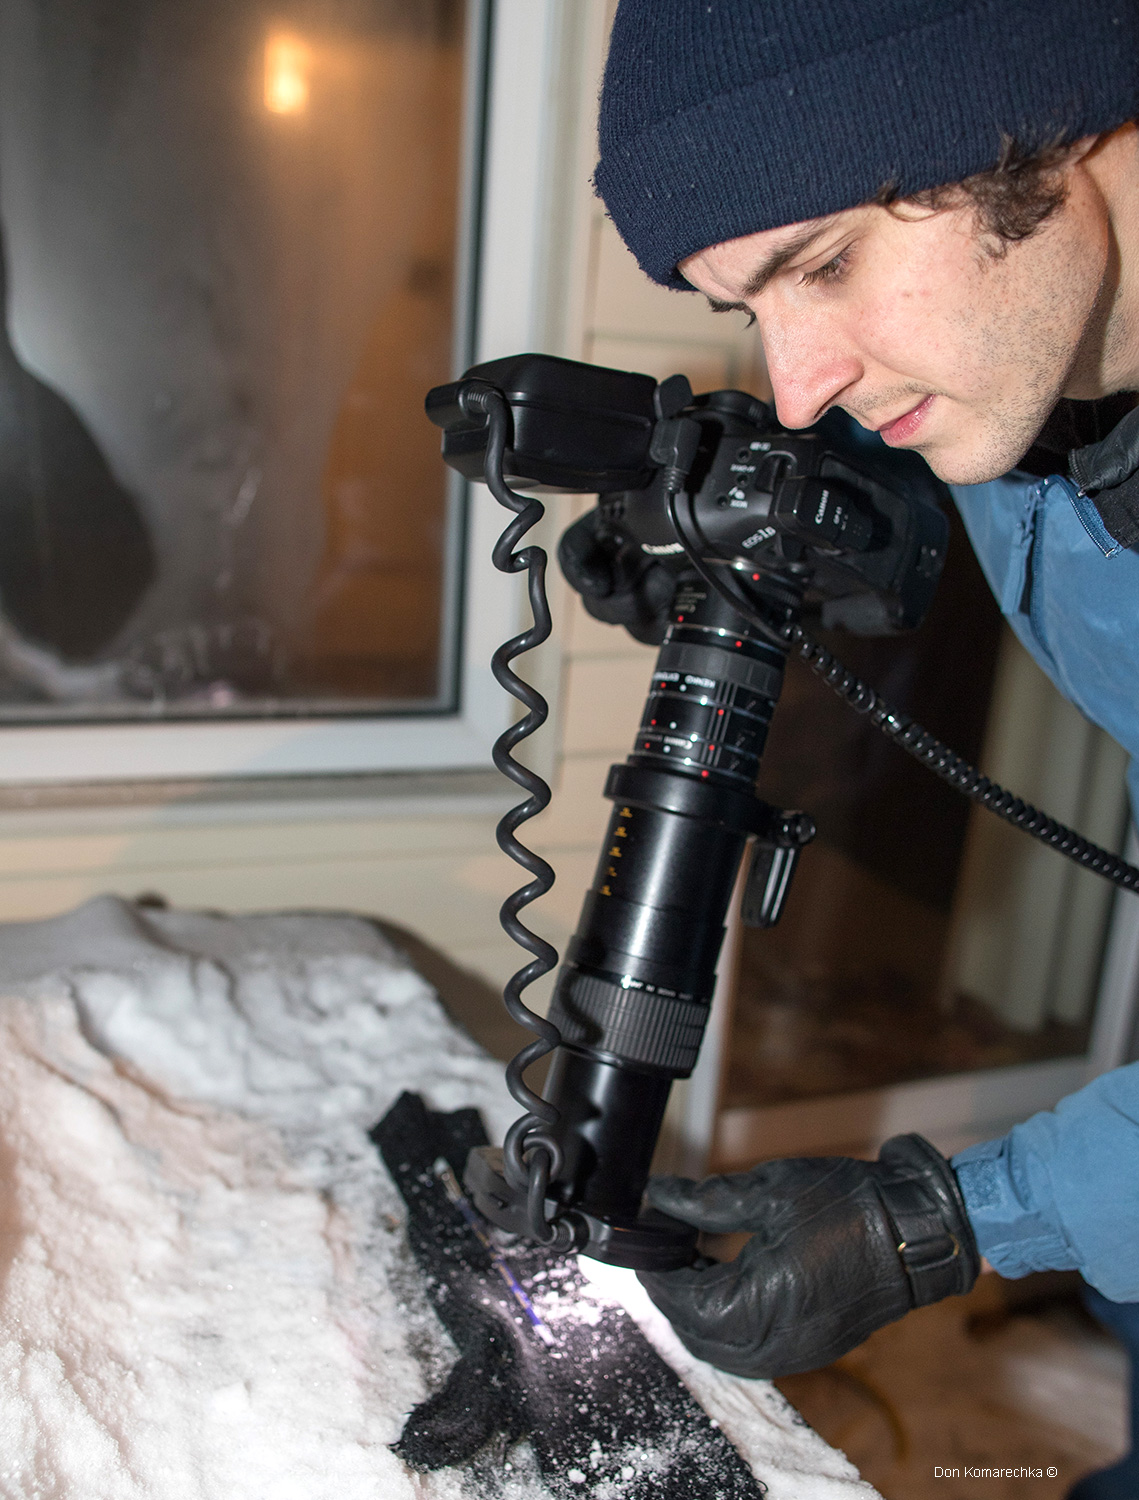 Photographing snow crystals with a Canon MP-E-65mm Macro lens Don Komarechka ©